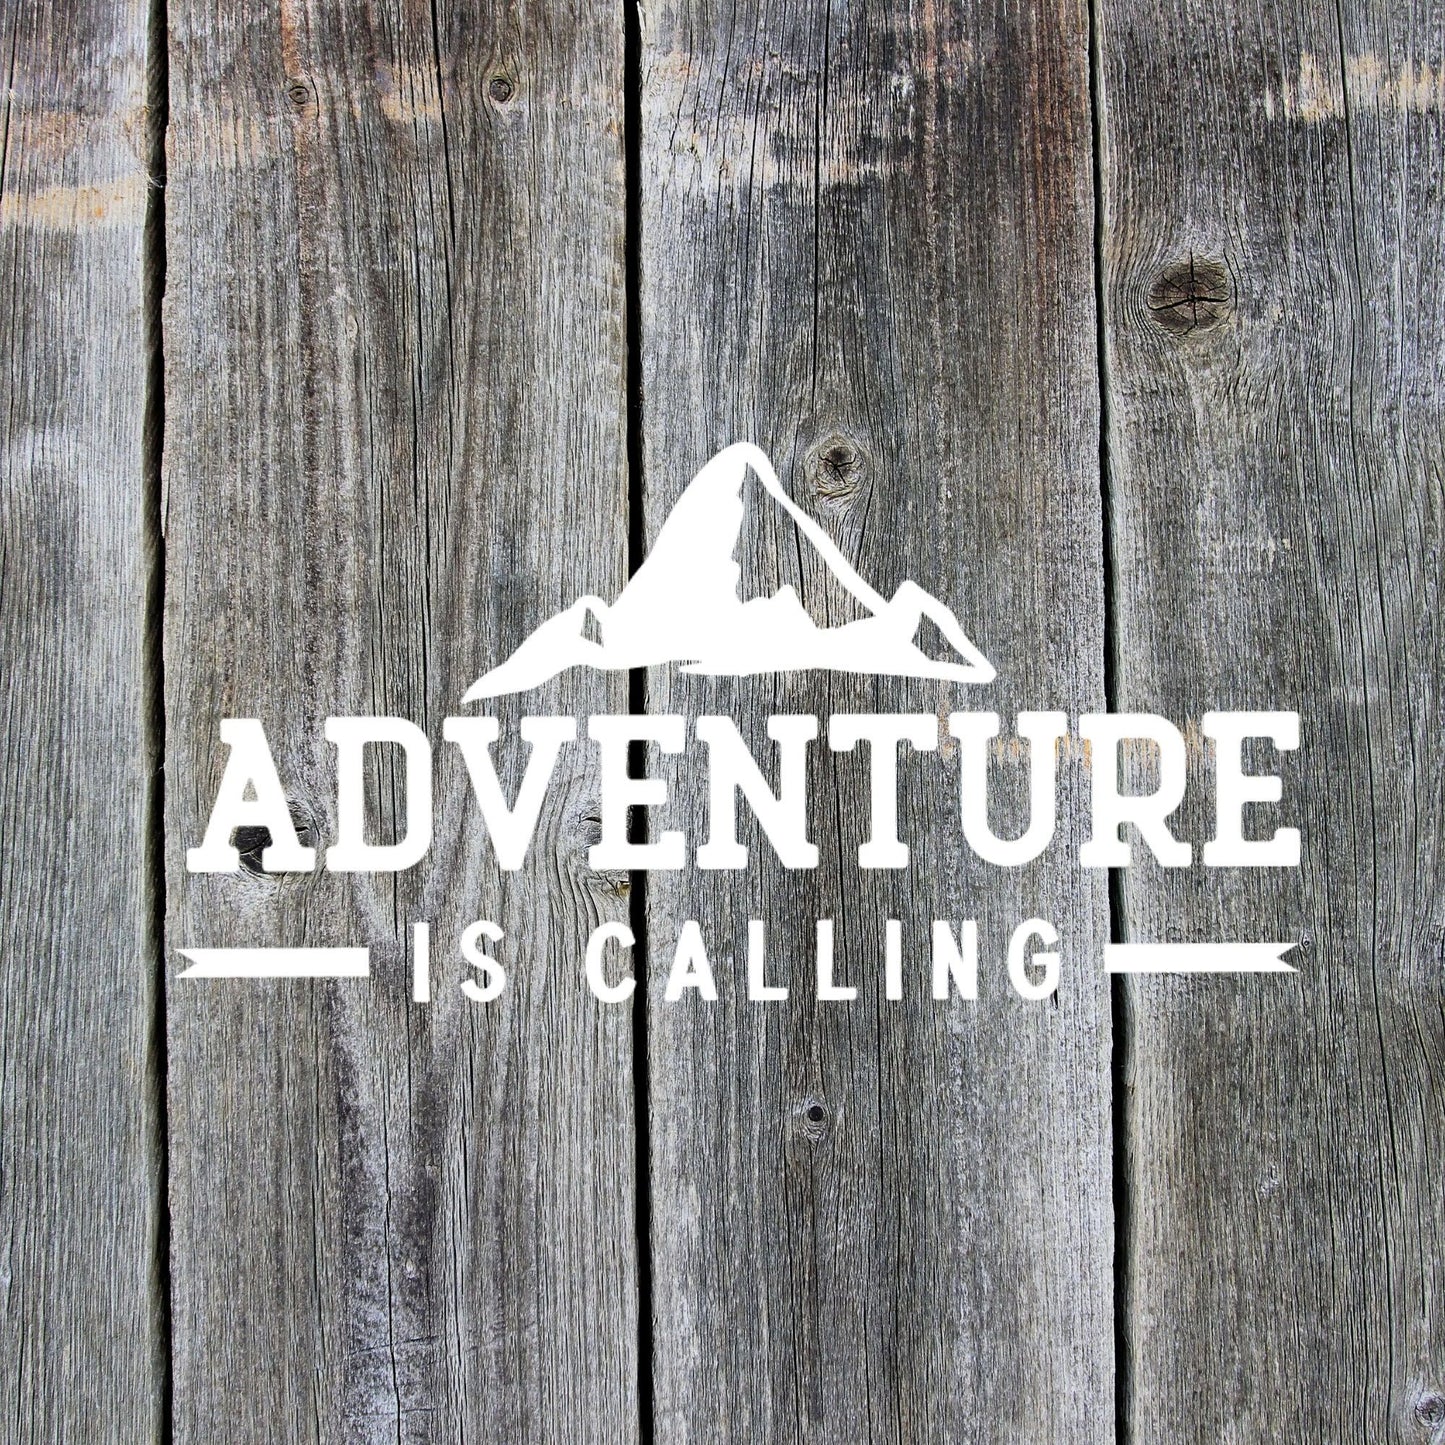 Adventure is Calling Vinyl Decal White Mountain Peeks Outdoors Lover Car Water Bottle Laptop Adventure Sticker